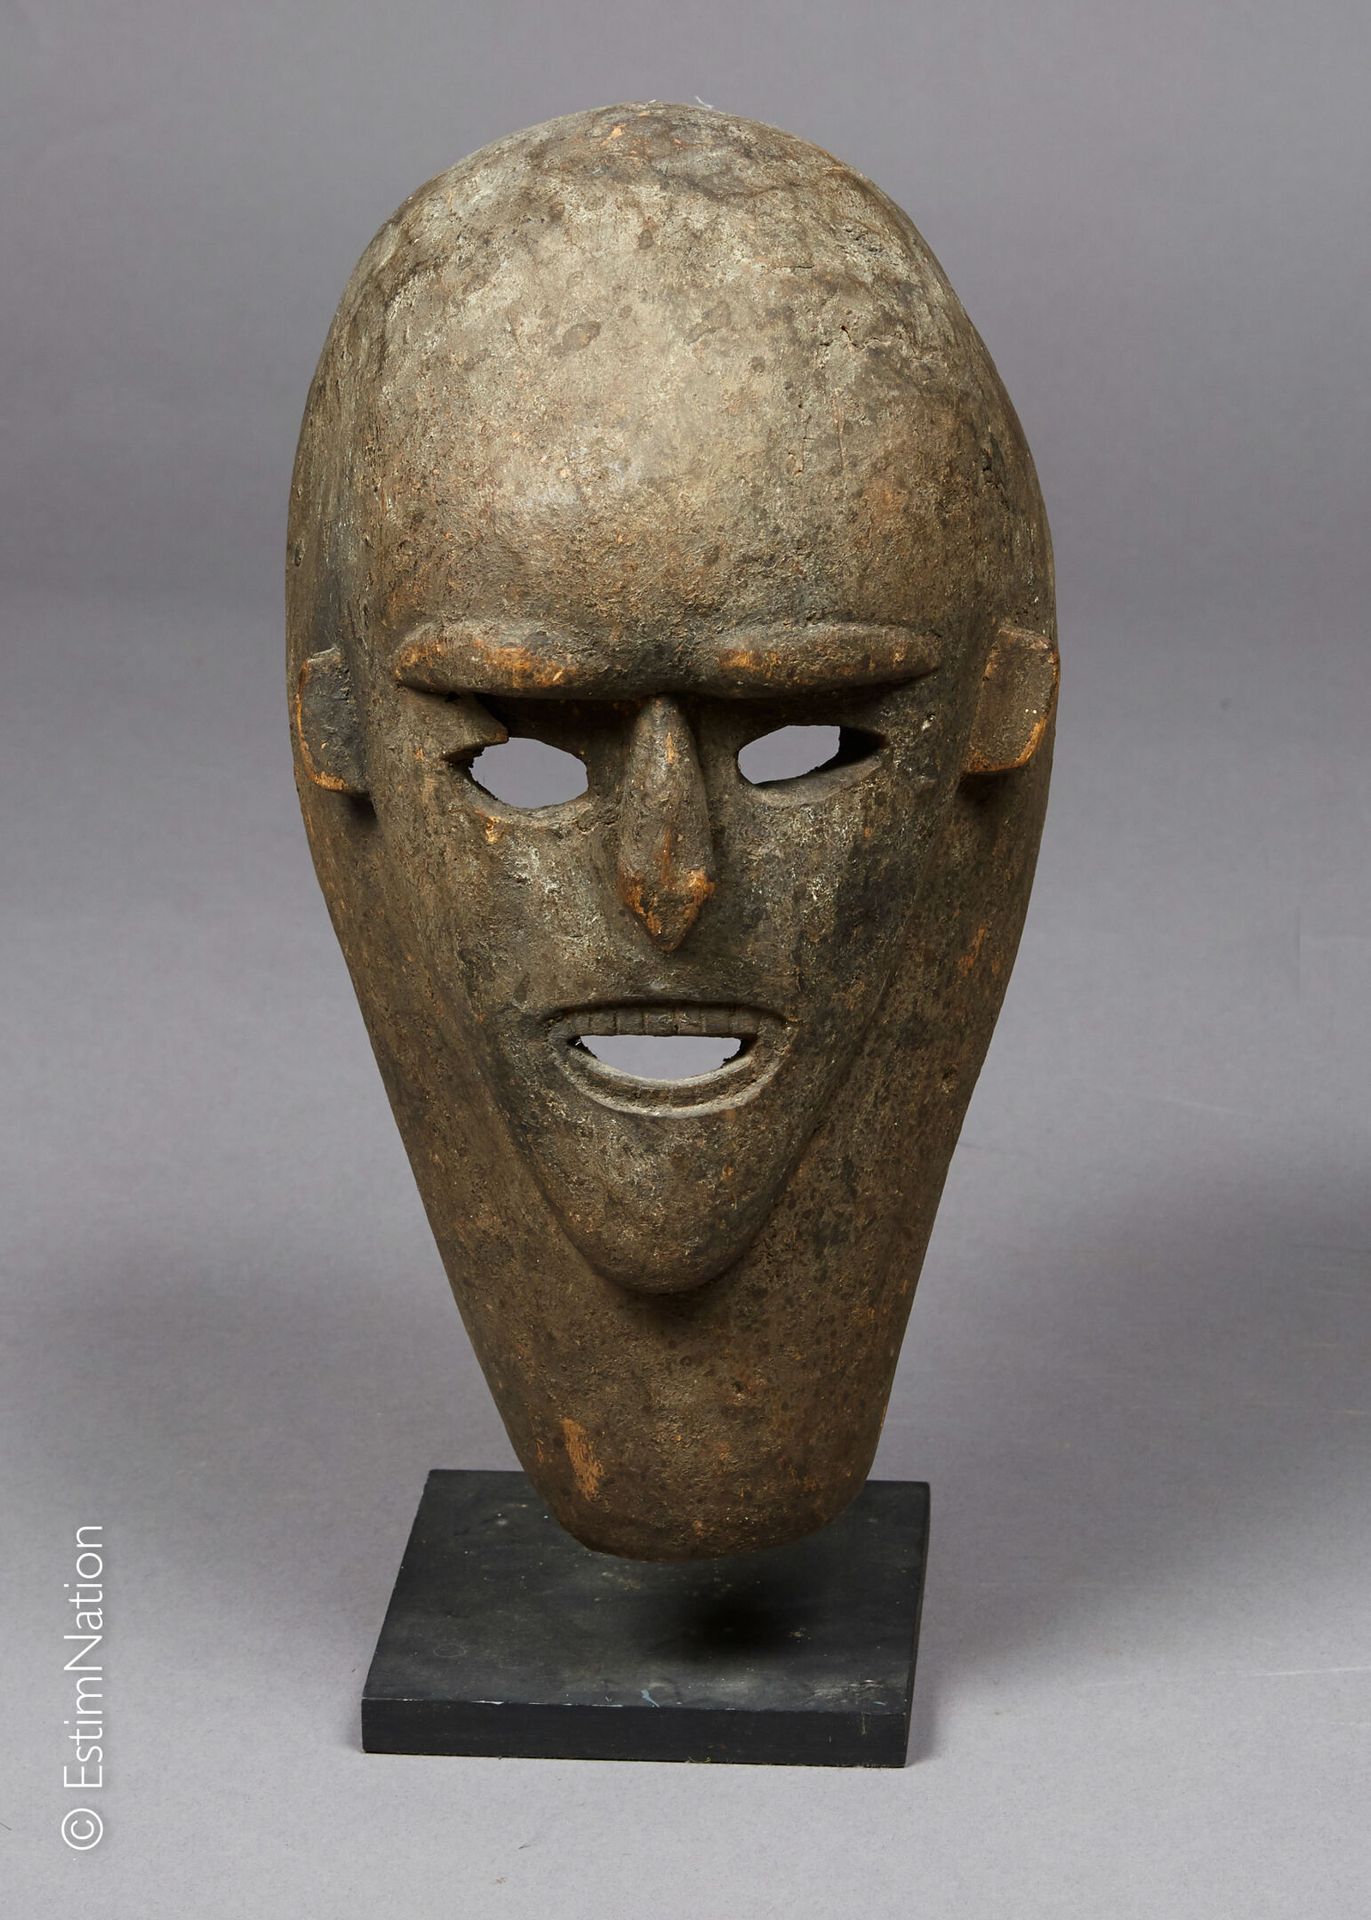 TIMOR 钛合金



用天然颜料雕刻的木制面具，显示出一张张开的嘴脸



主题高度：35厘米 - 宽度：19厘米 - 深度：15厘米 

基地



(竞&hellip;